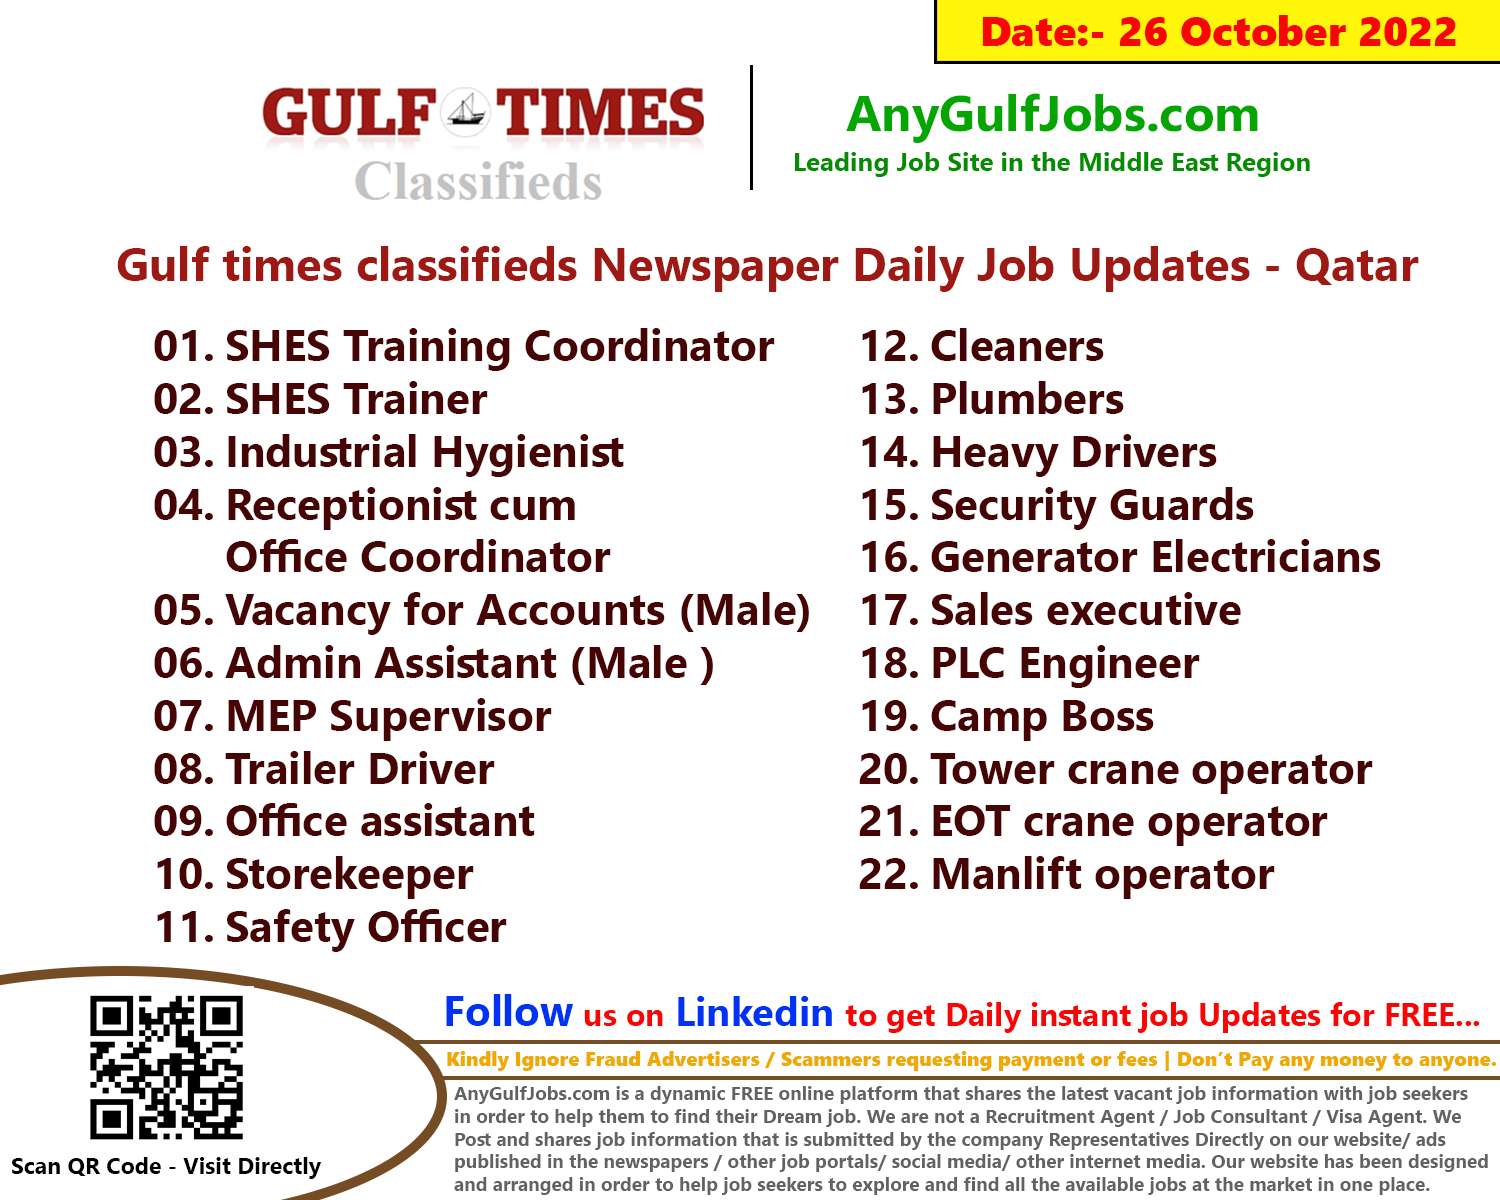 Gulf times classifieds Job Vacancies Qatar - 26 October 2022